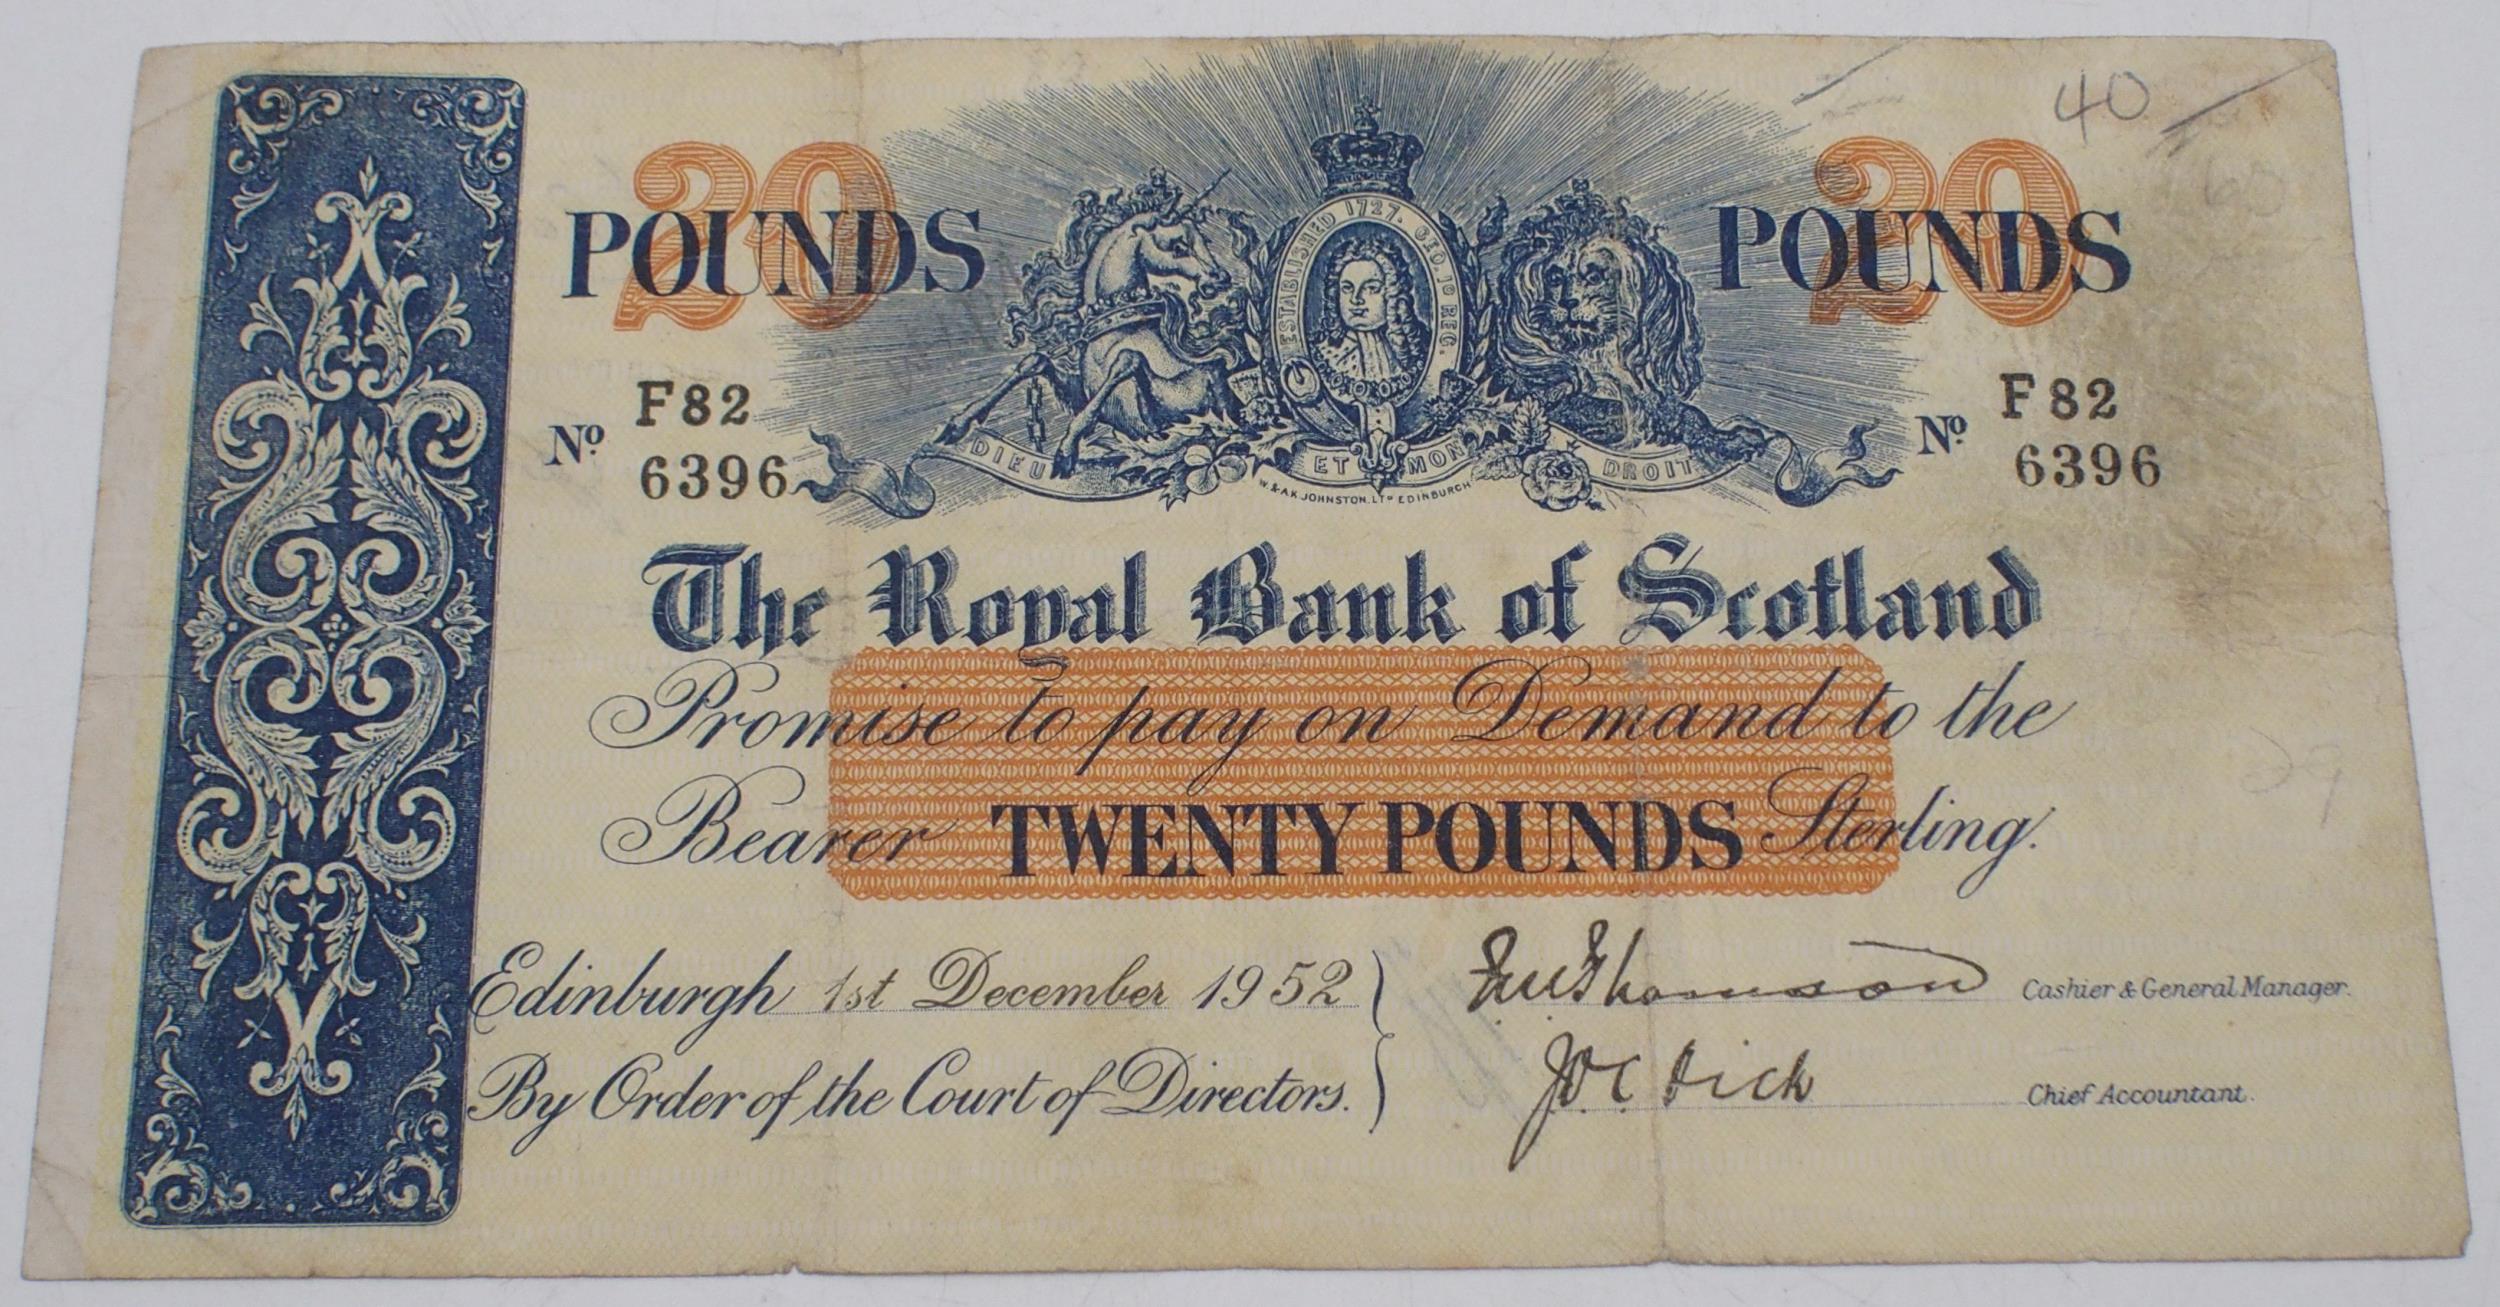 The Royal Bank of Scotland £20 Edinburgh 1st December 1952 No. F82 6396 double signatures